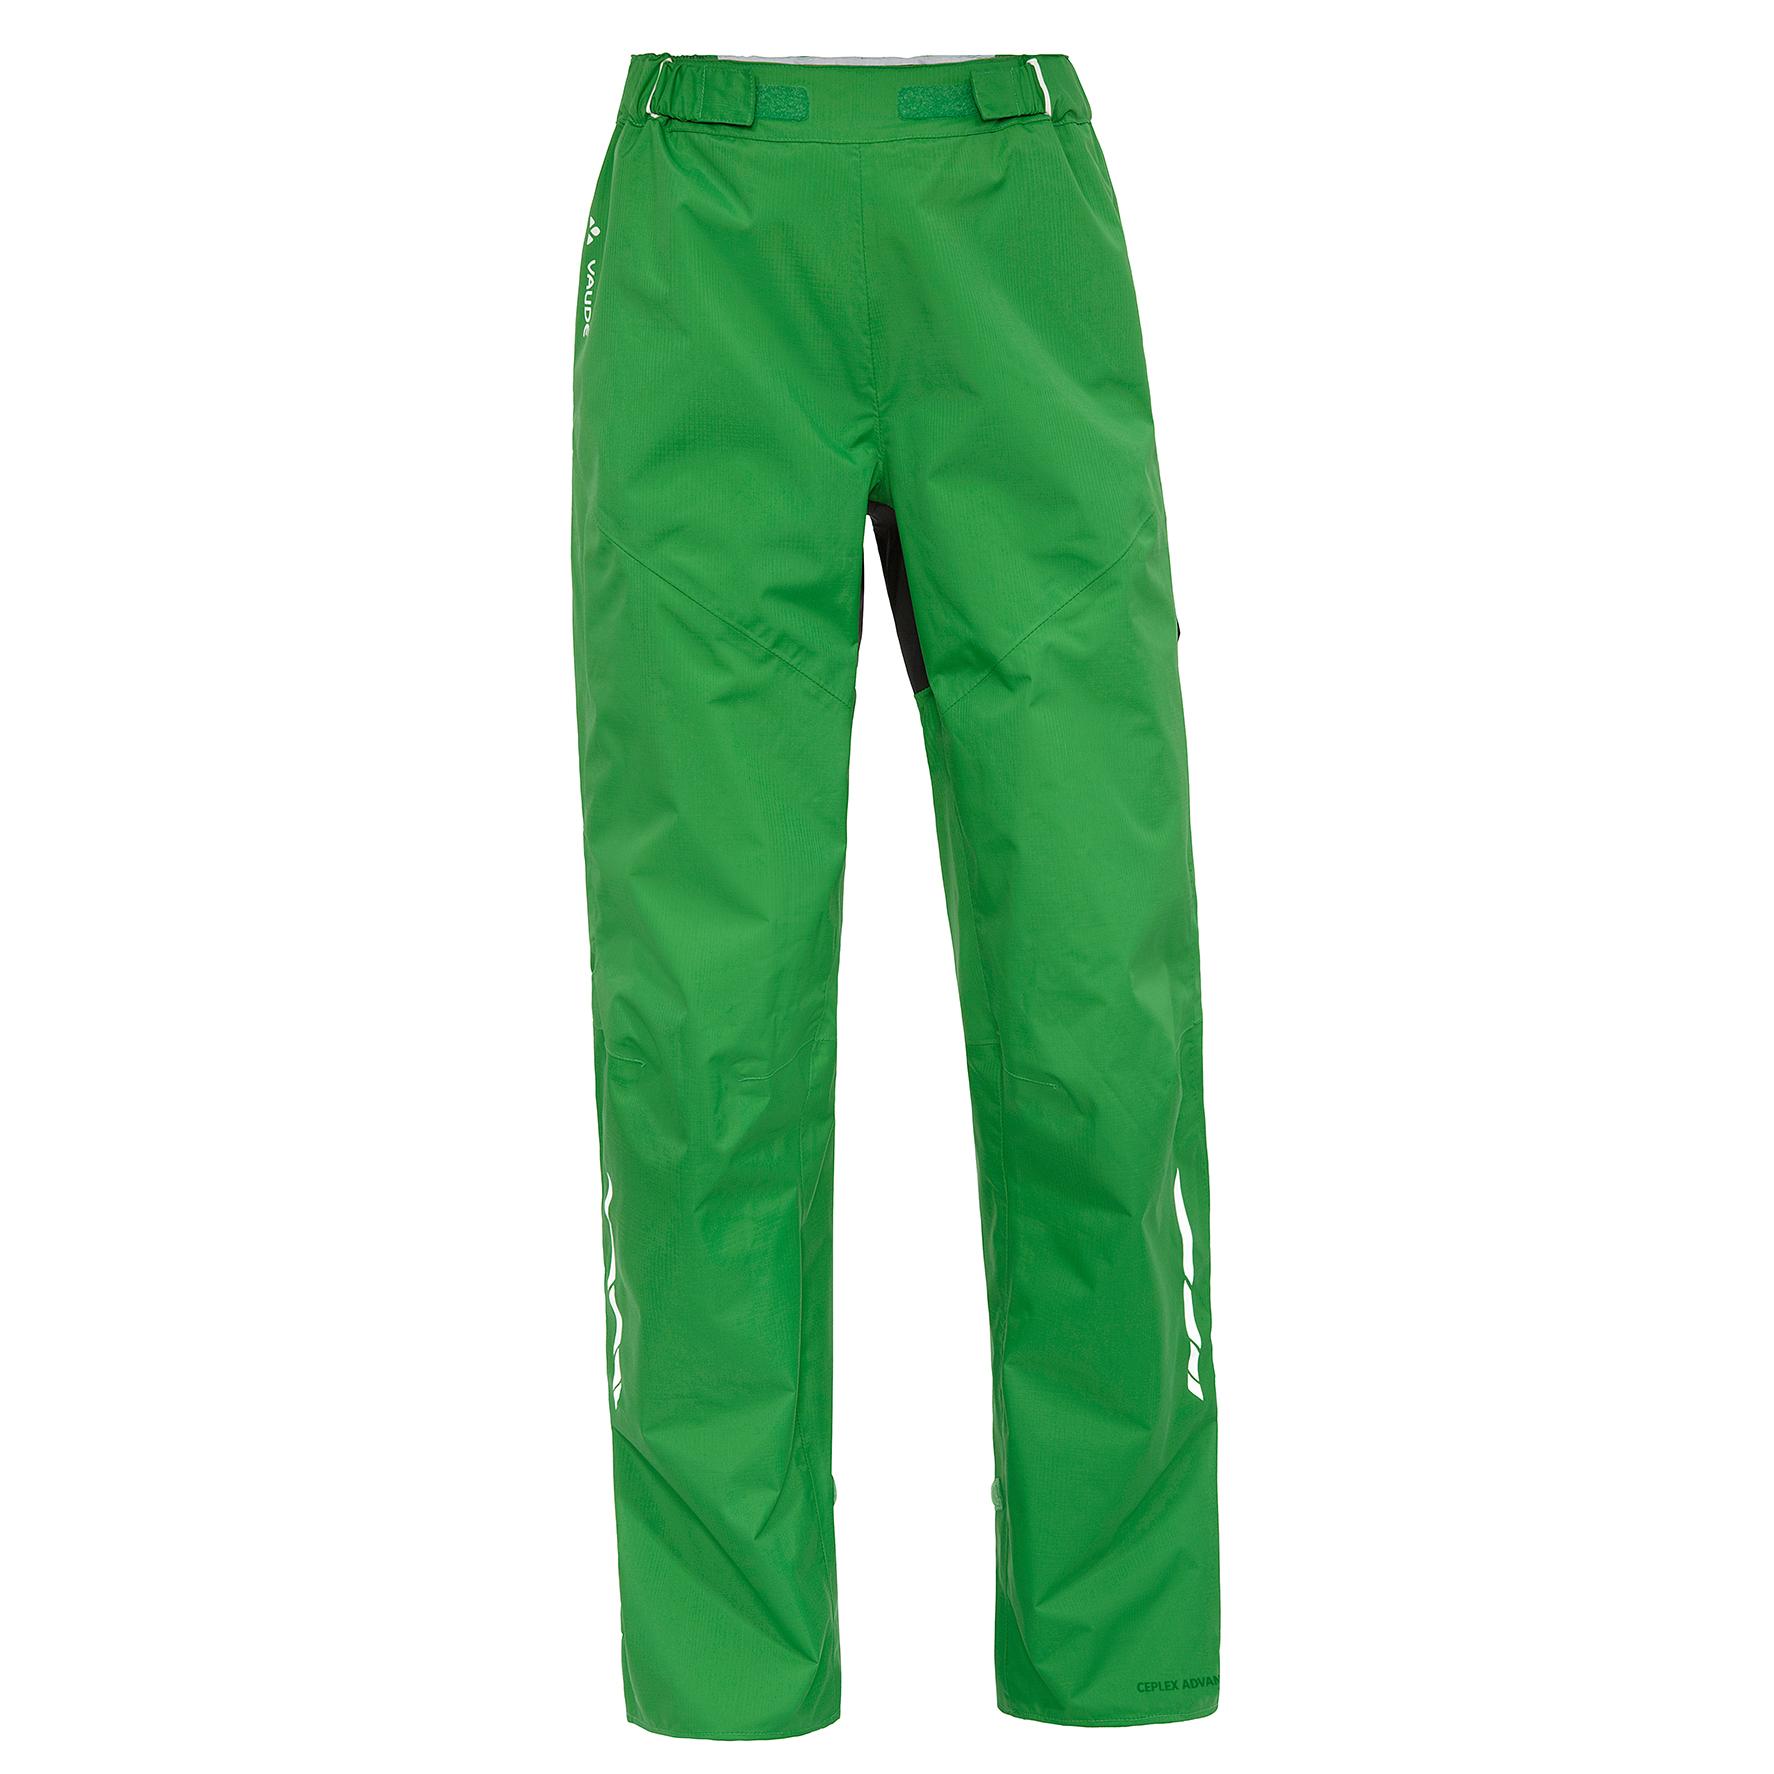 Foto Pantalones impermeables para ciclismo Vaude Tiak verde para muj, 42 foto 944571